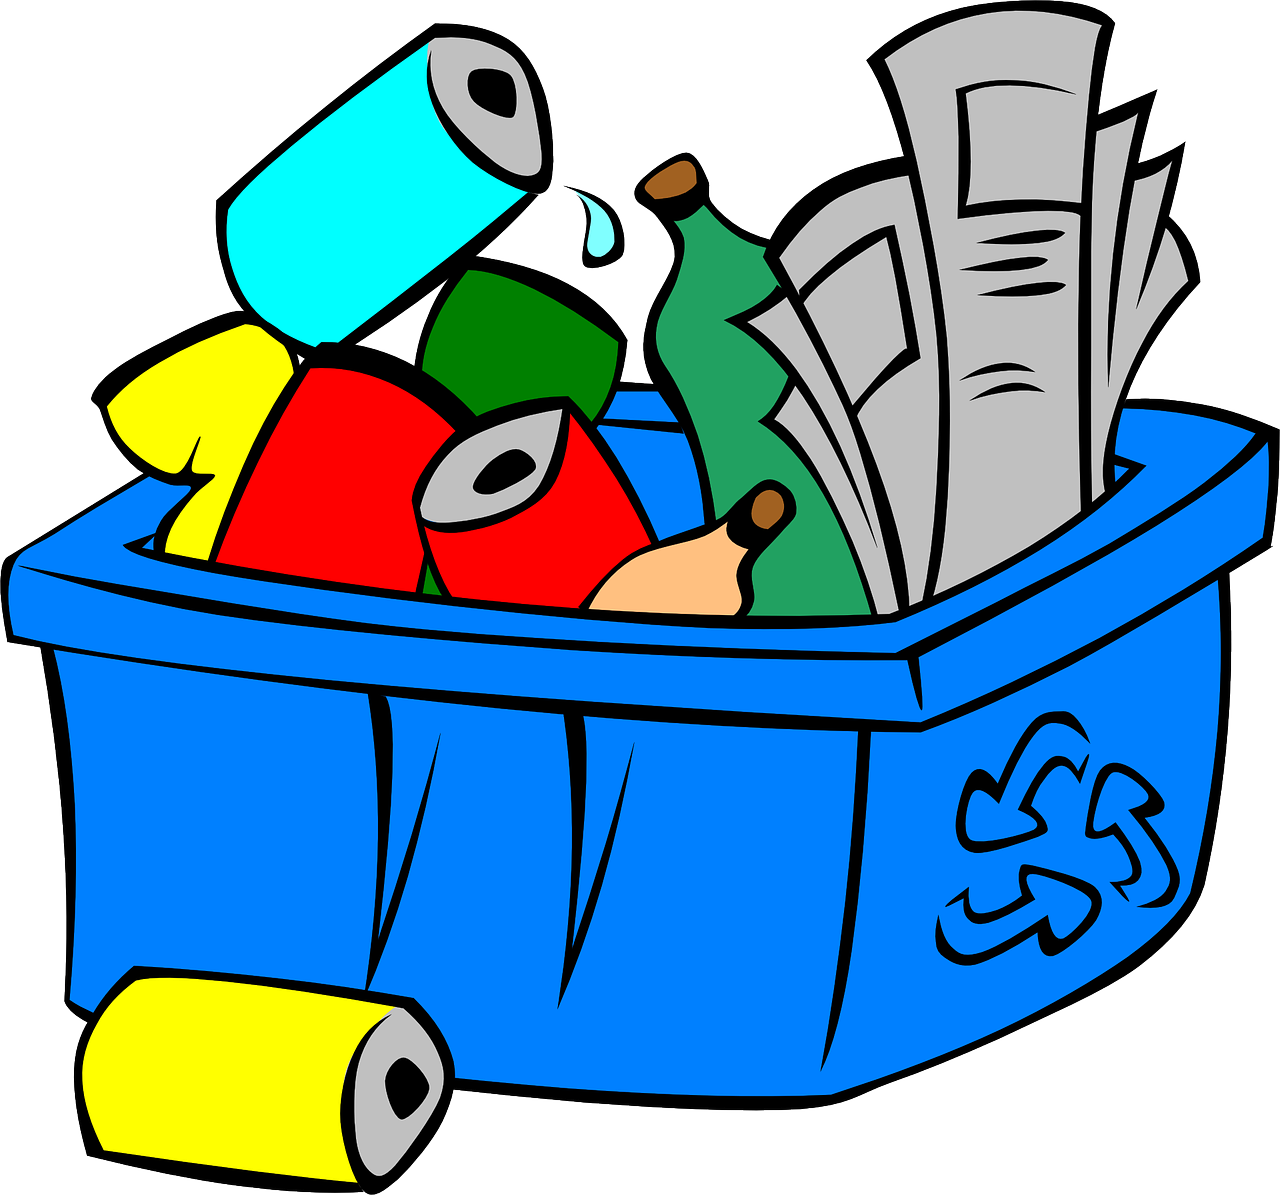 Recycling Bin Fullof Items PNG image